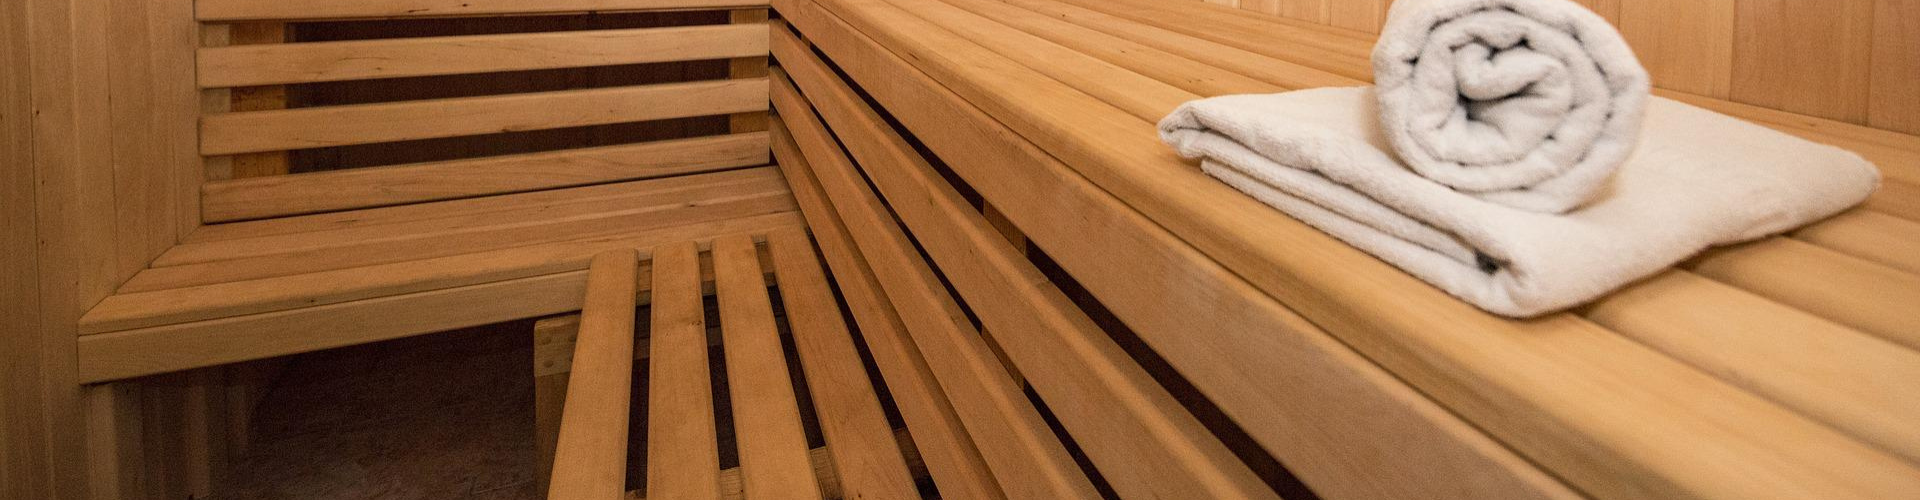 How to Clean a Sauna